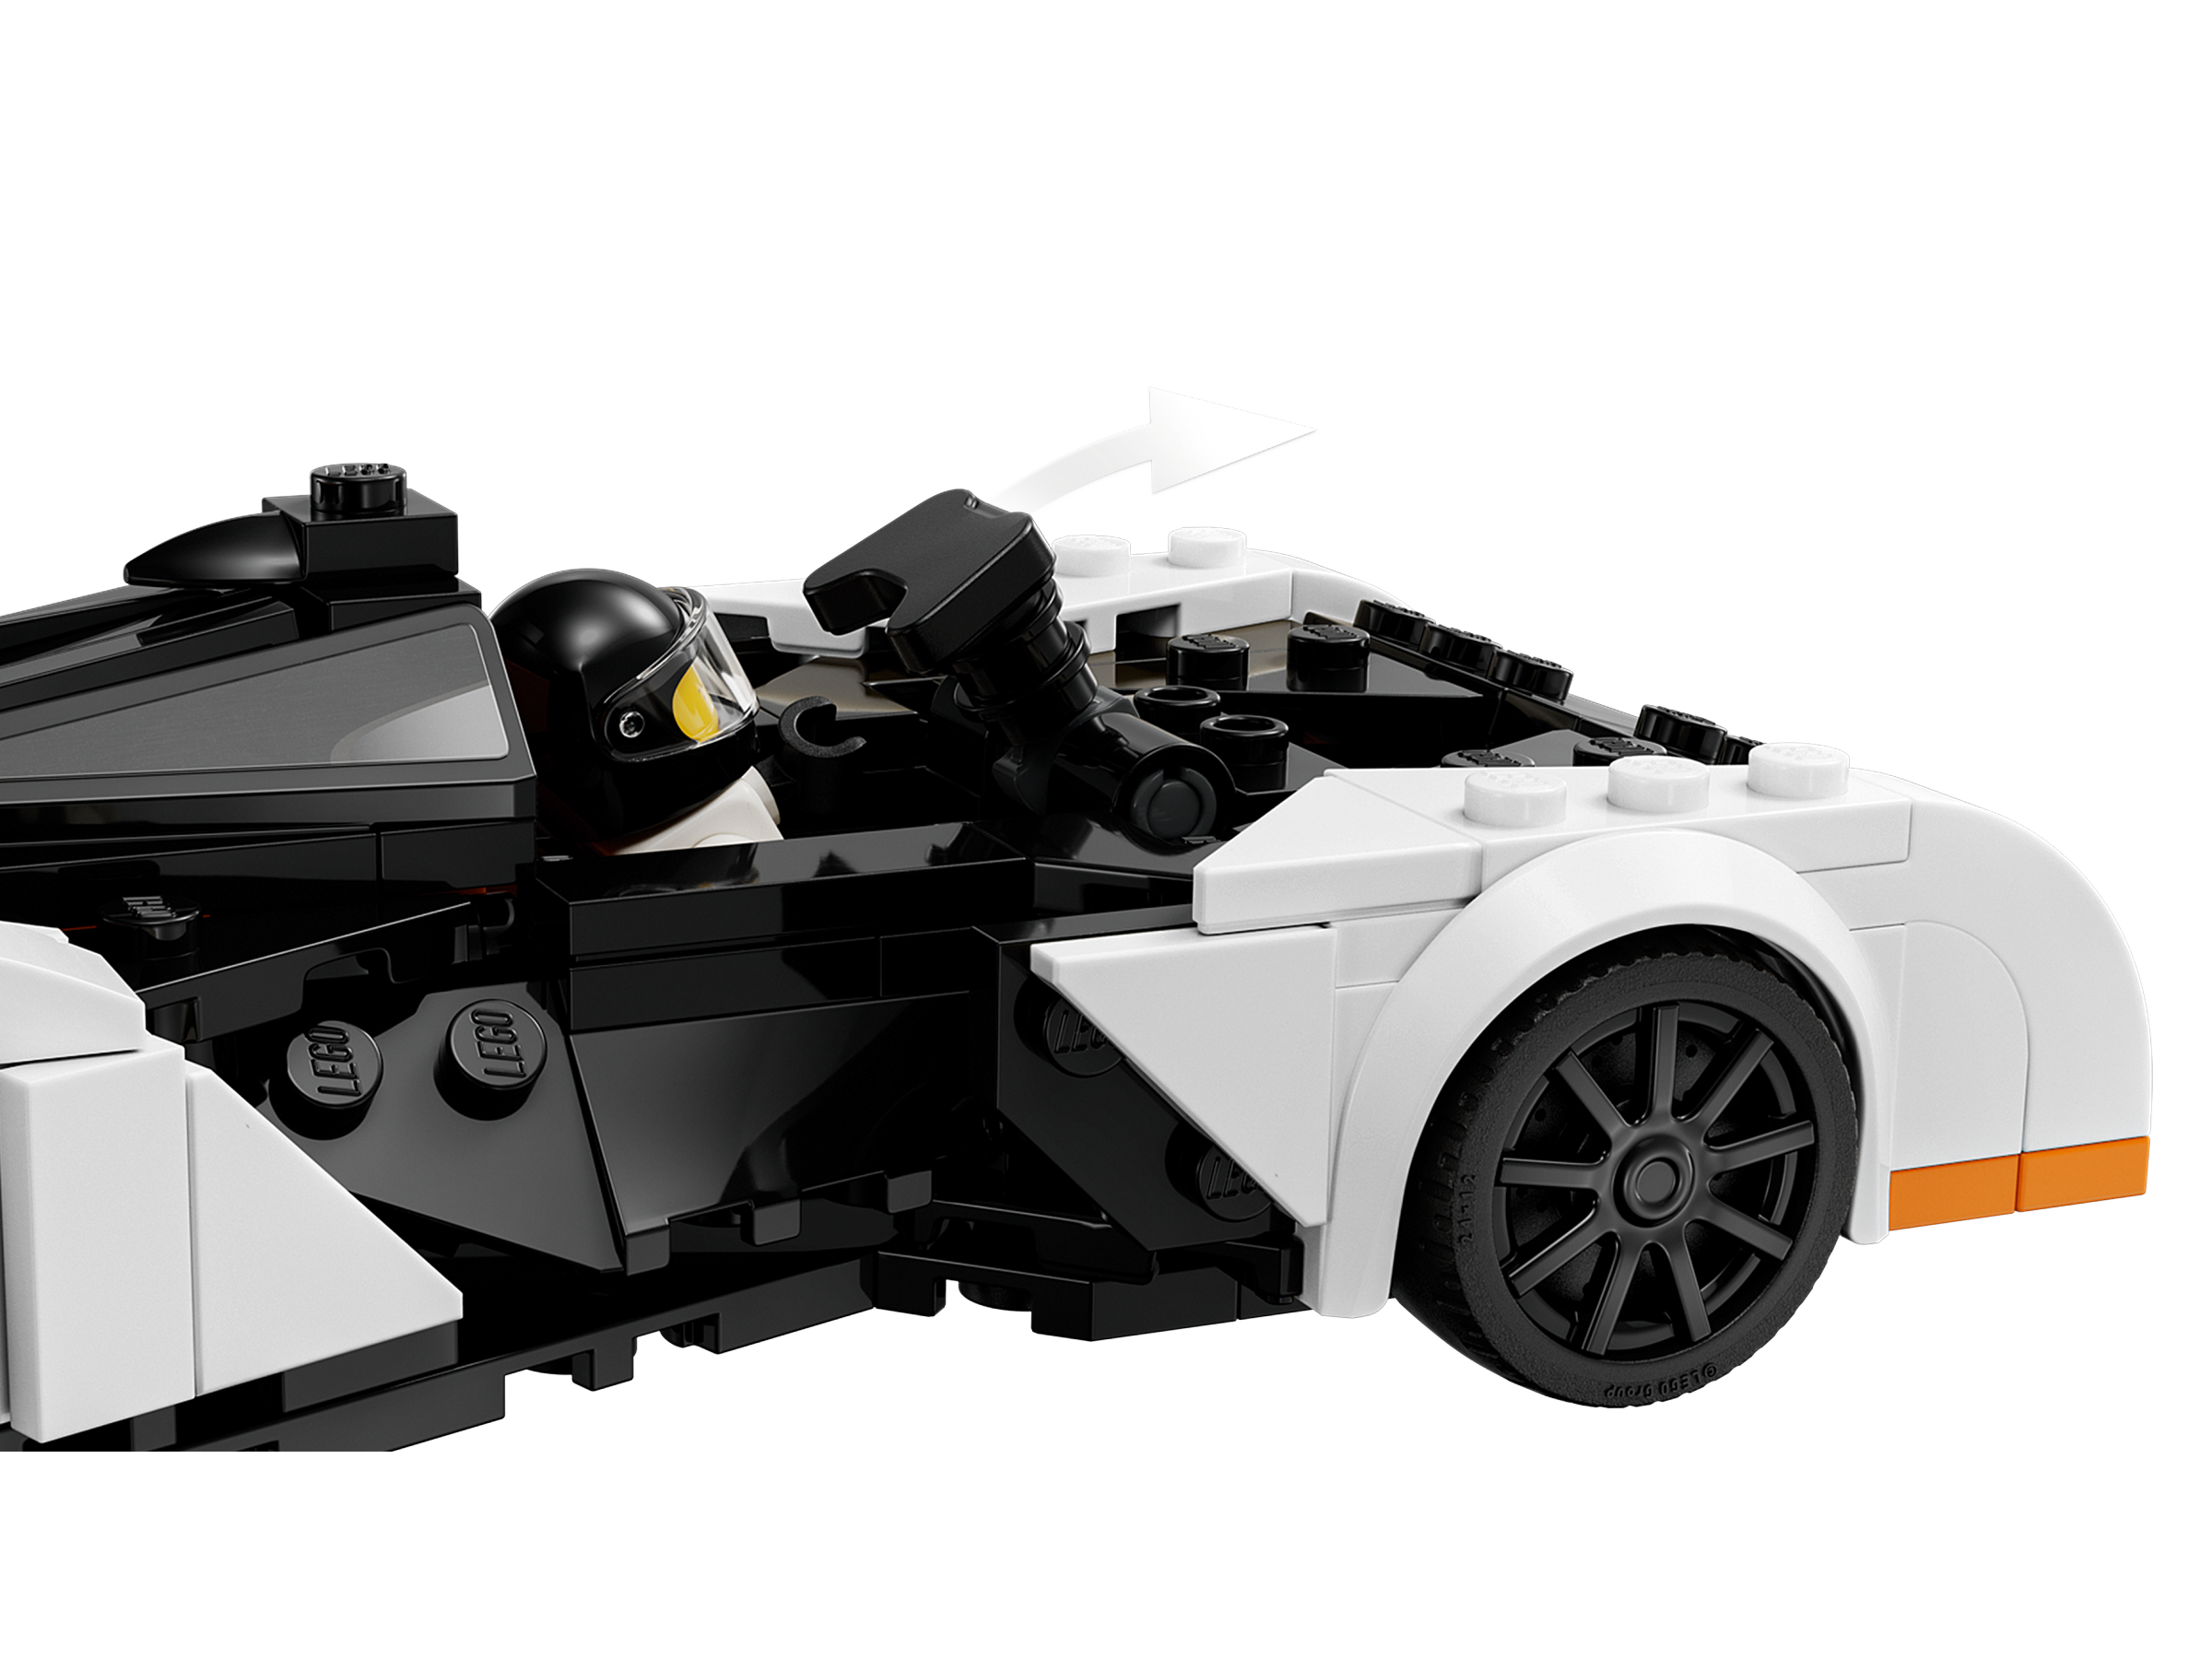 LEGO Speed Champions McLaren Solus GT & McLaren F1 LM